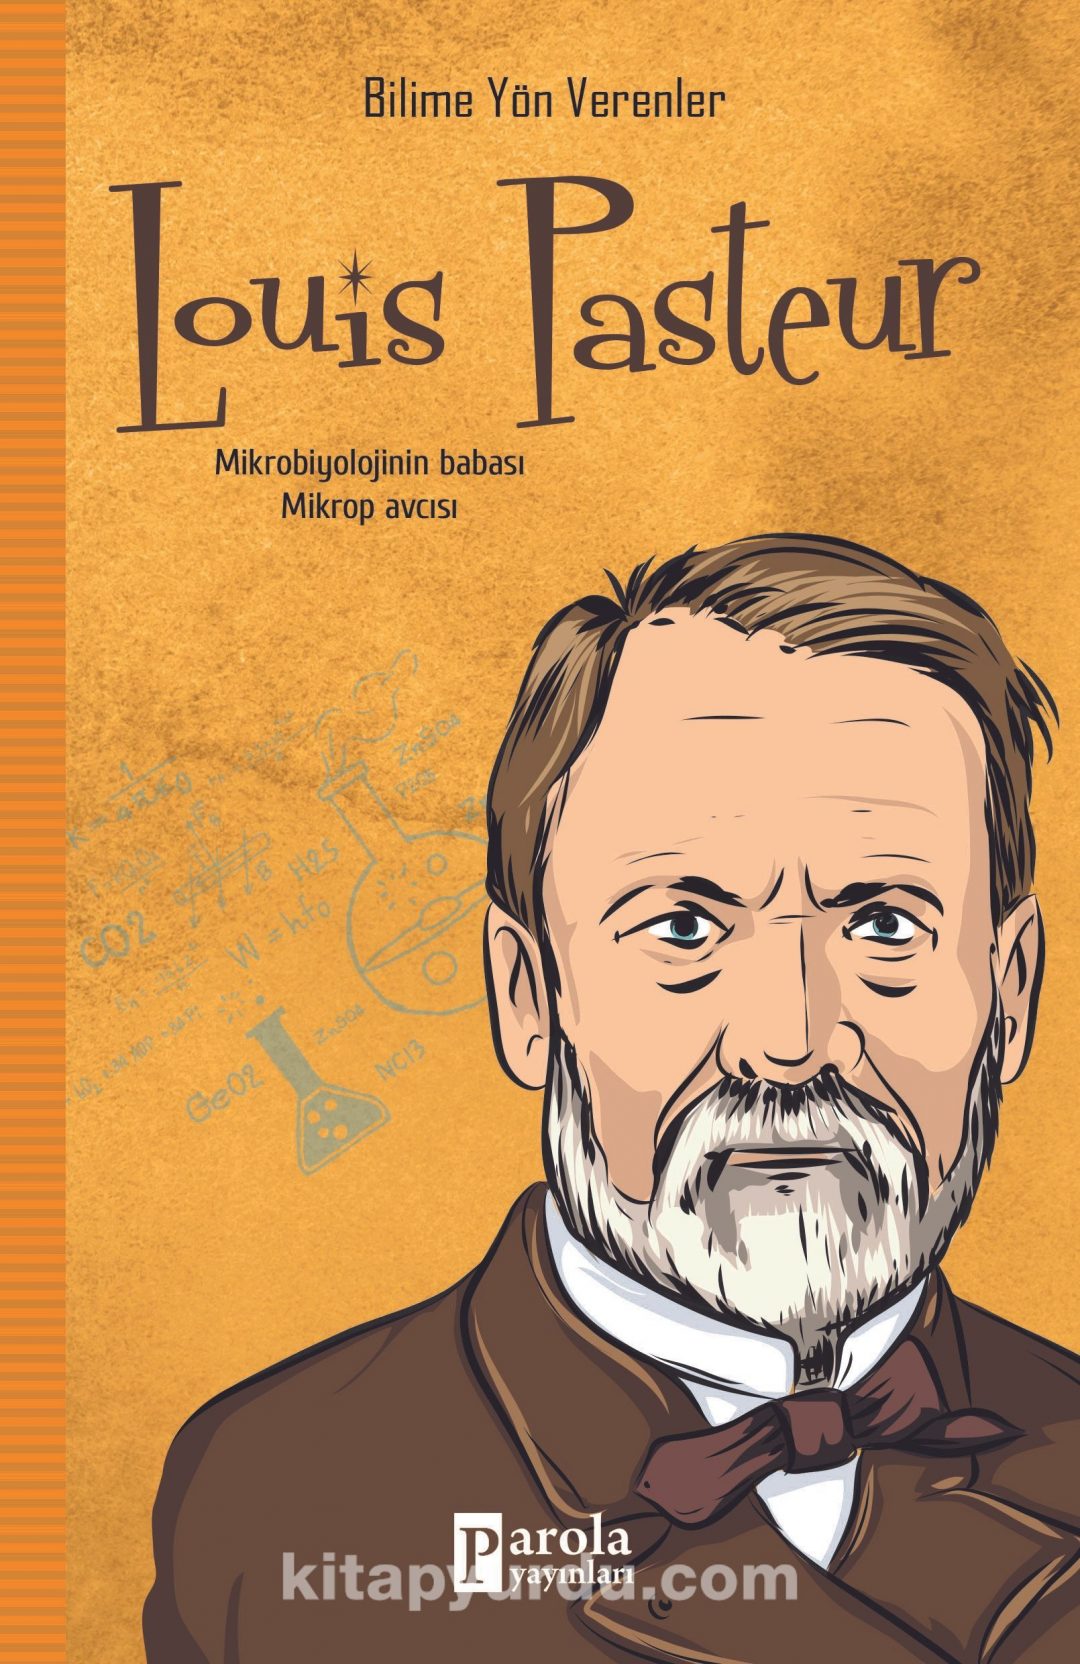 Louis Pasteur / Bilime Yön Verenler